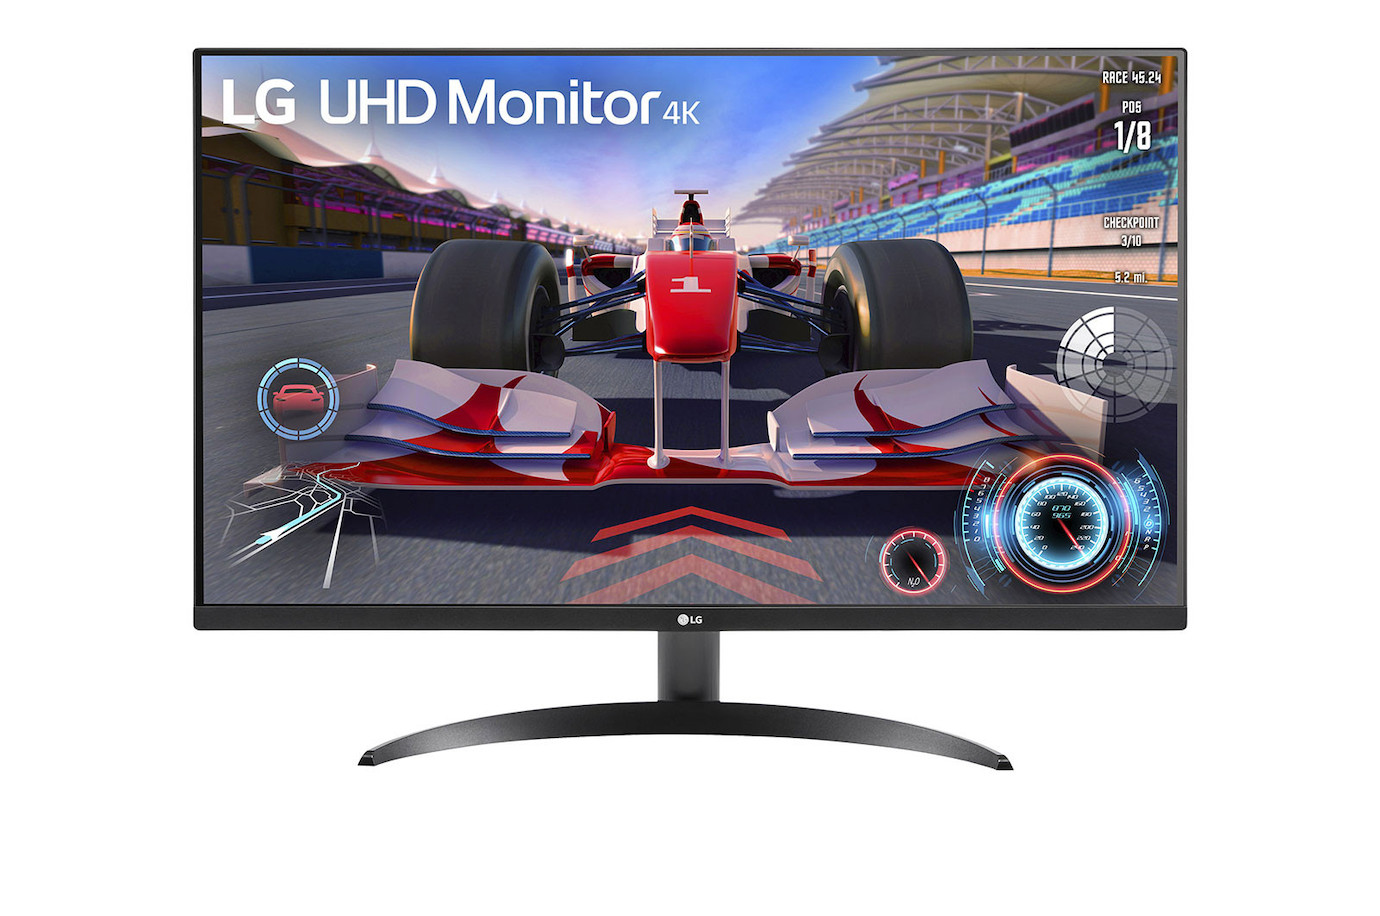 LG 32UR500-B UHD 4K HDR Monitor